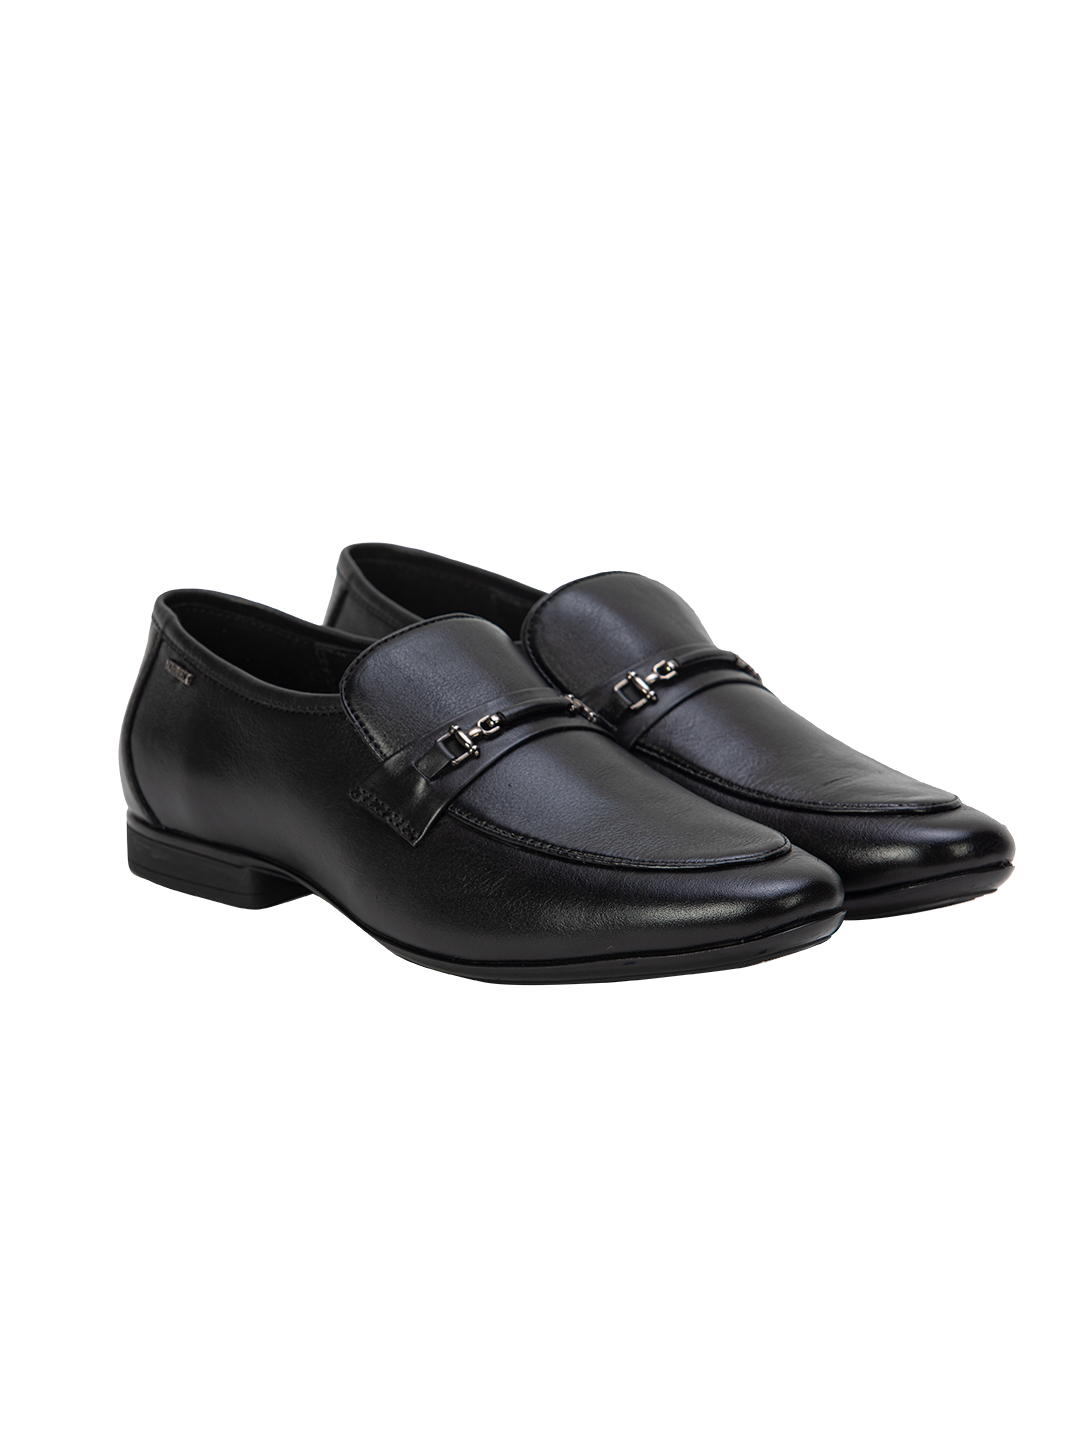 Buy Von Wellx Germany Comfort Black Glib Shoes Online in Uttar Pradesh